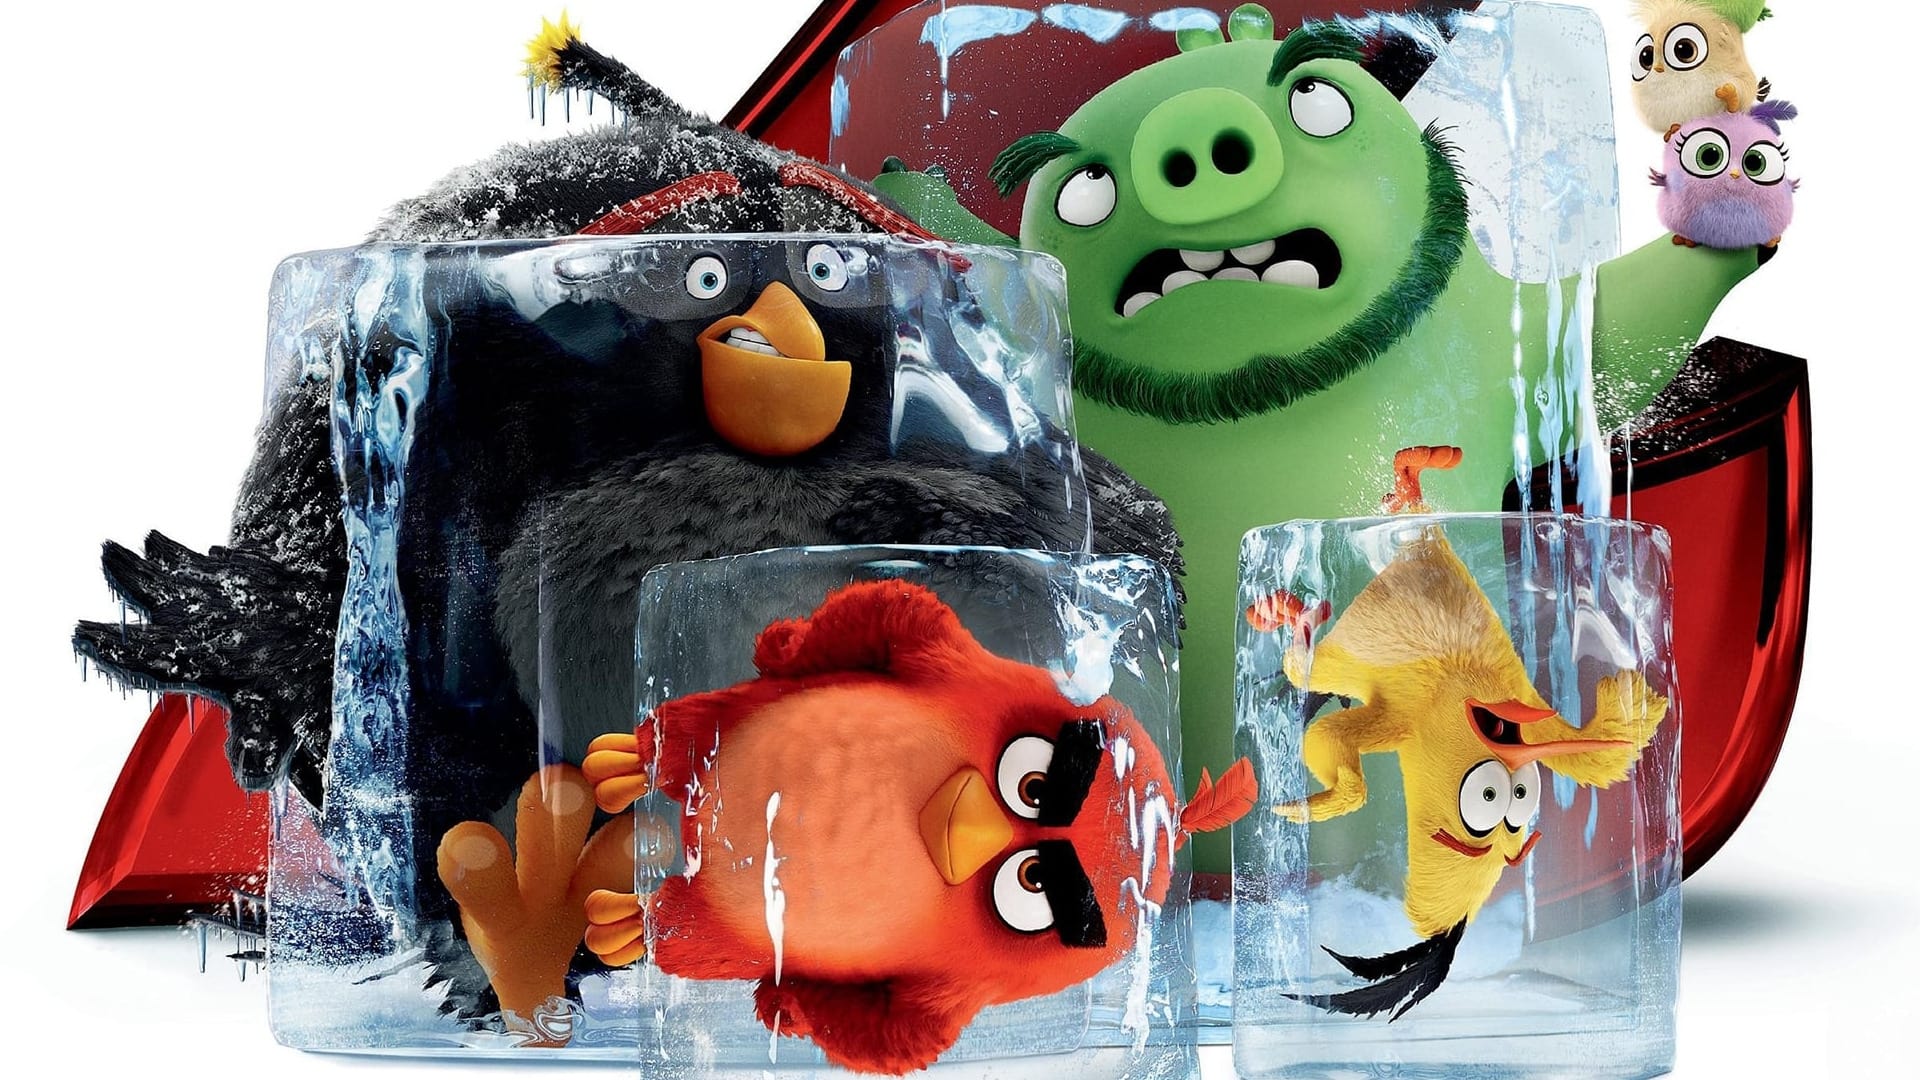 Image du film Angry Birds : copains comme cochons wzs1vjpvky38k3oamt0m8hizg1ujpg